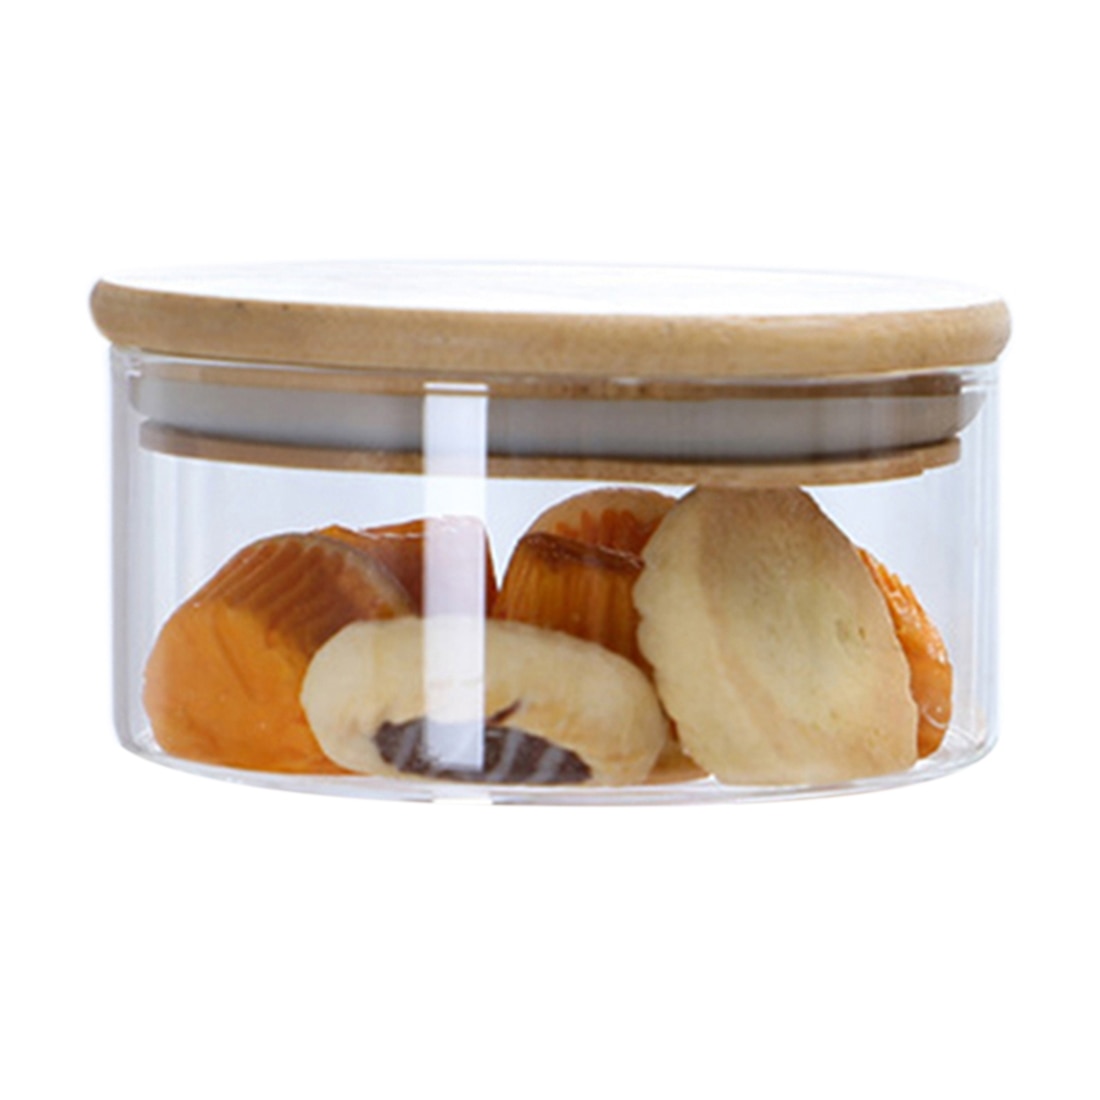 Cookie Jar Stackable Food Container